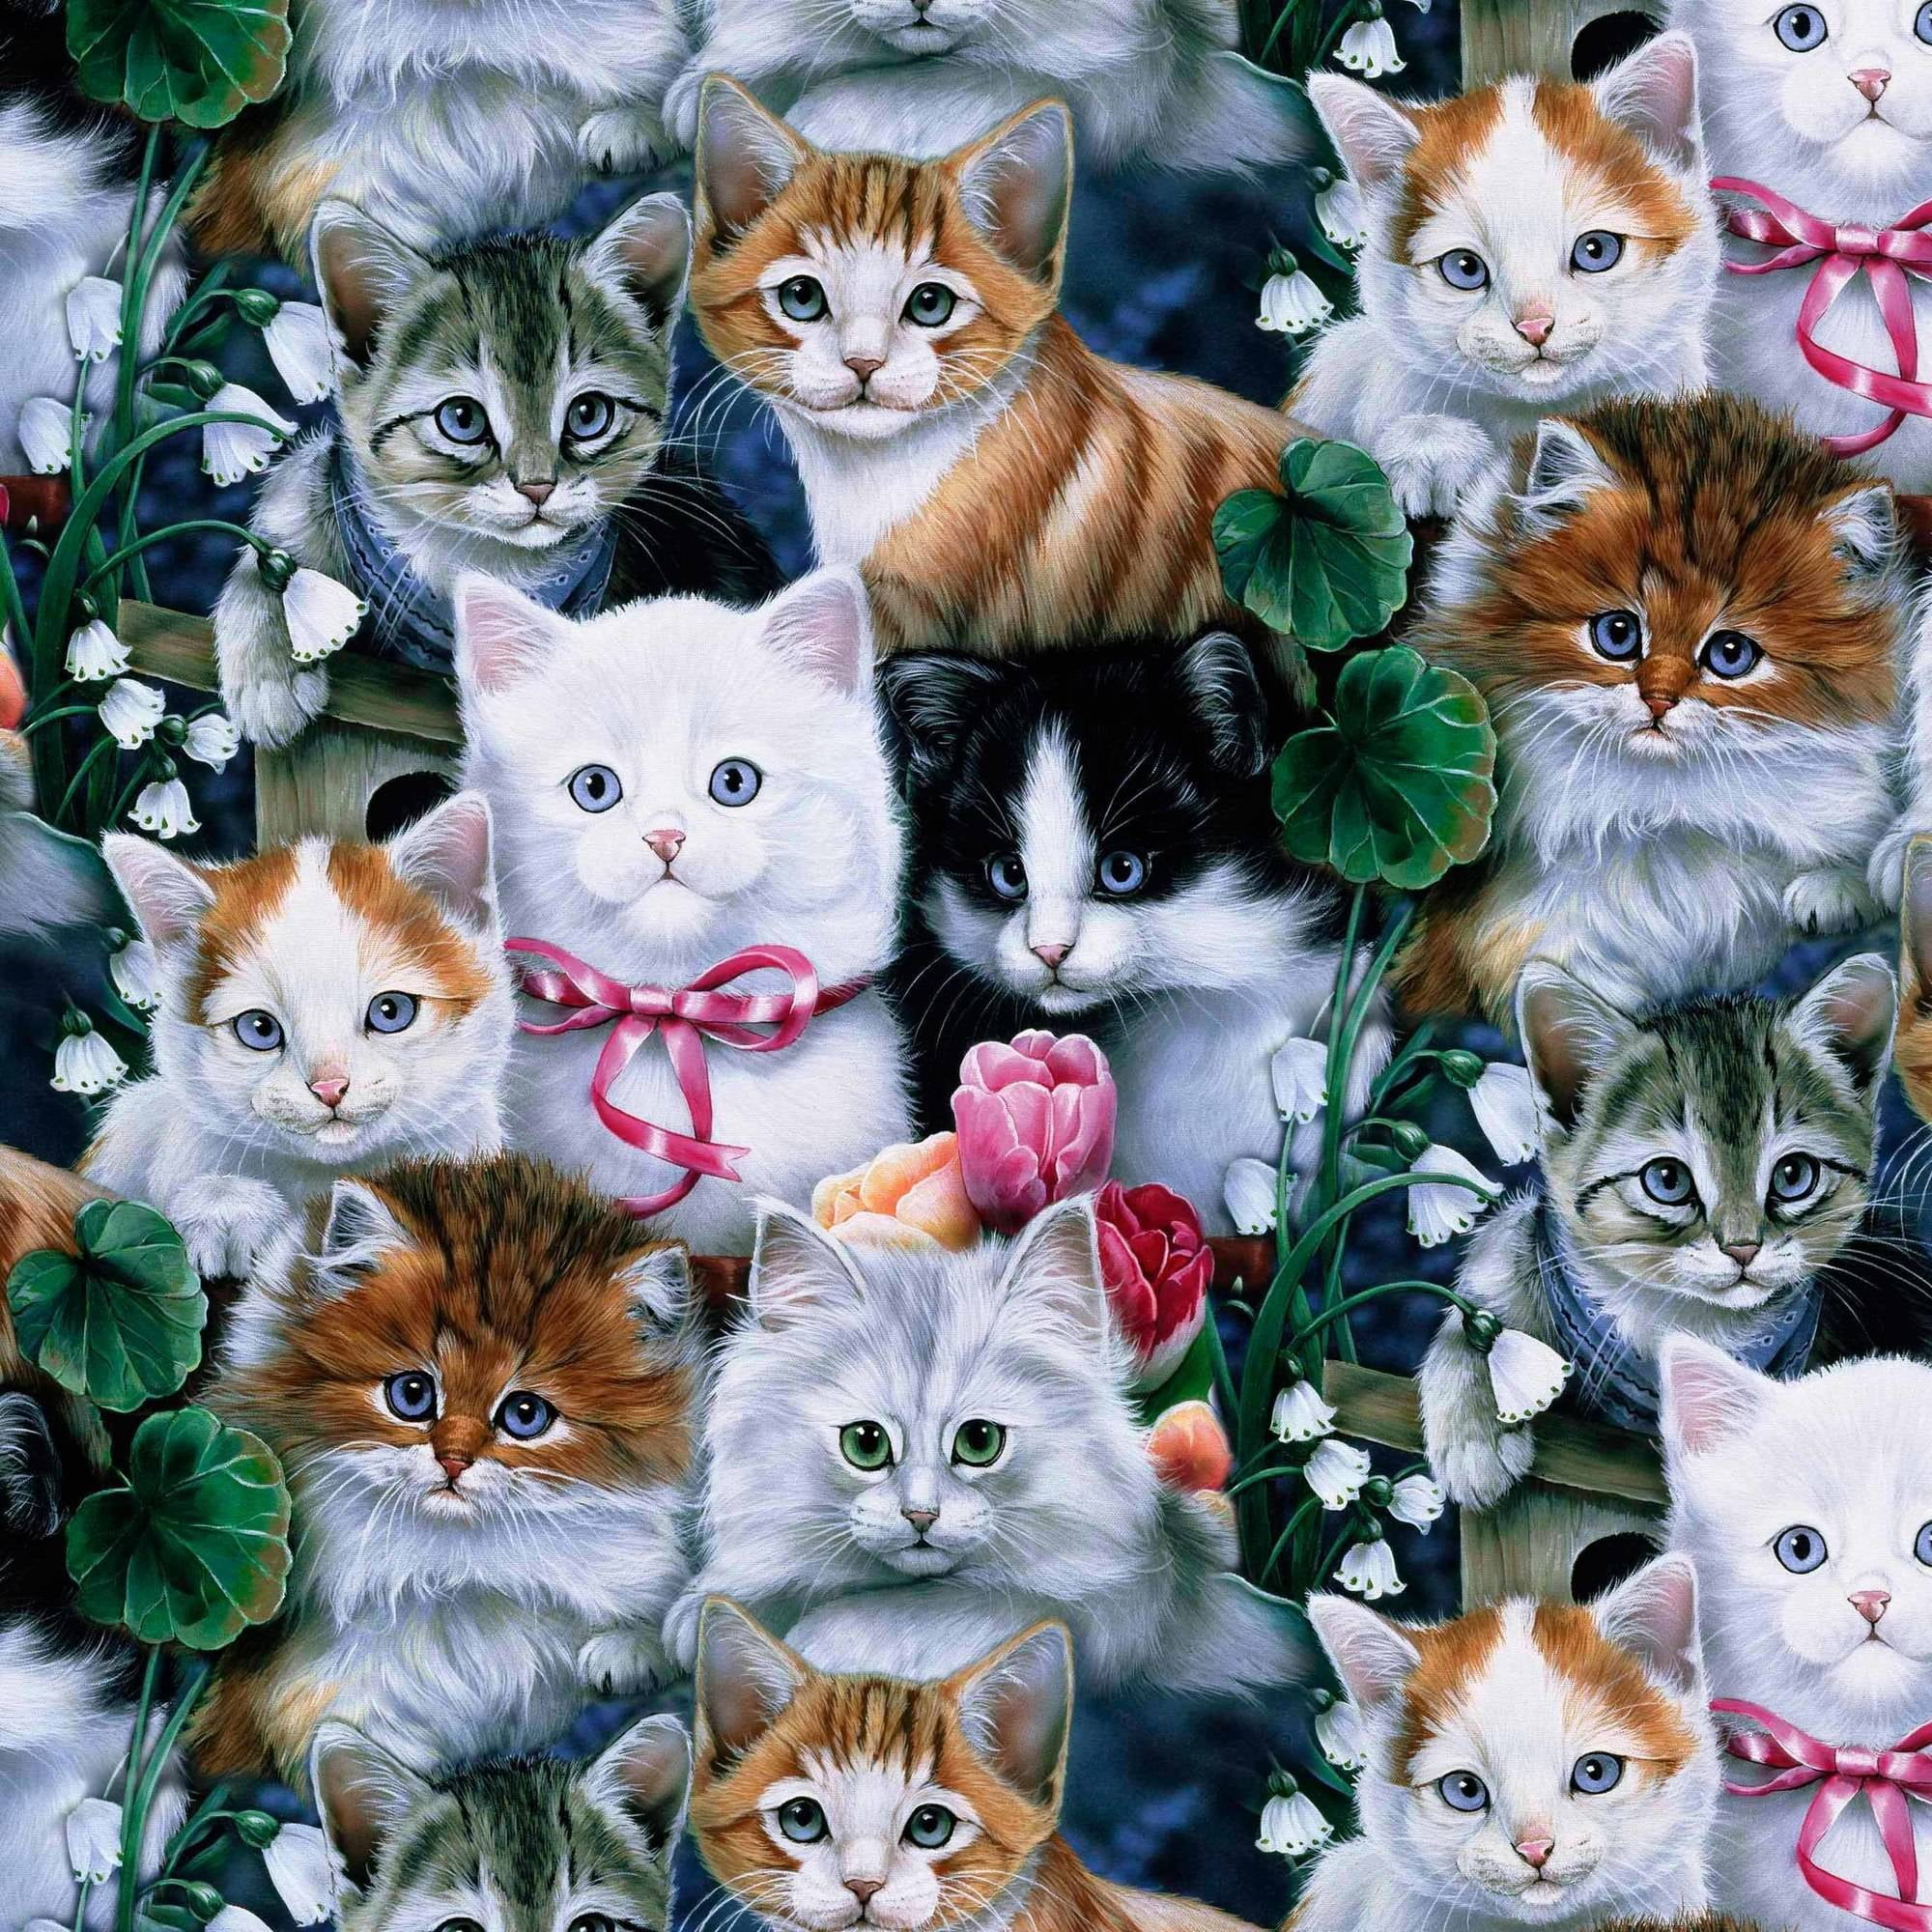 Ткань кошки купить. Принты с кошками. Ткань с котиками. Ткань с кошечками. Рисунок на ткани кошки.